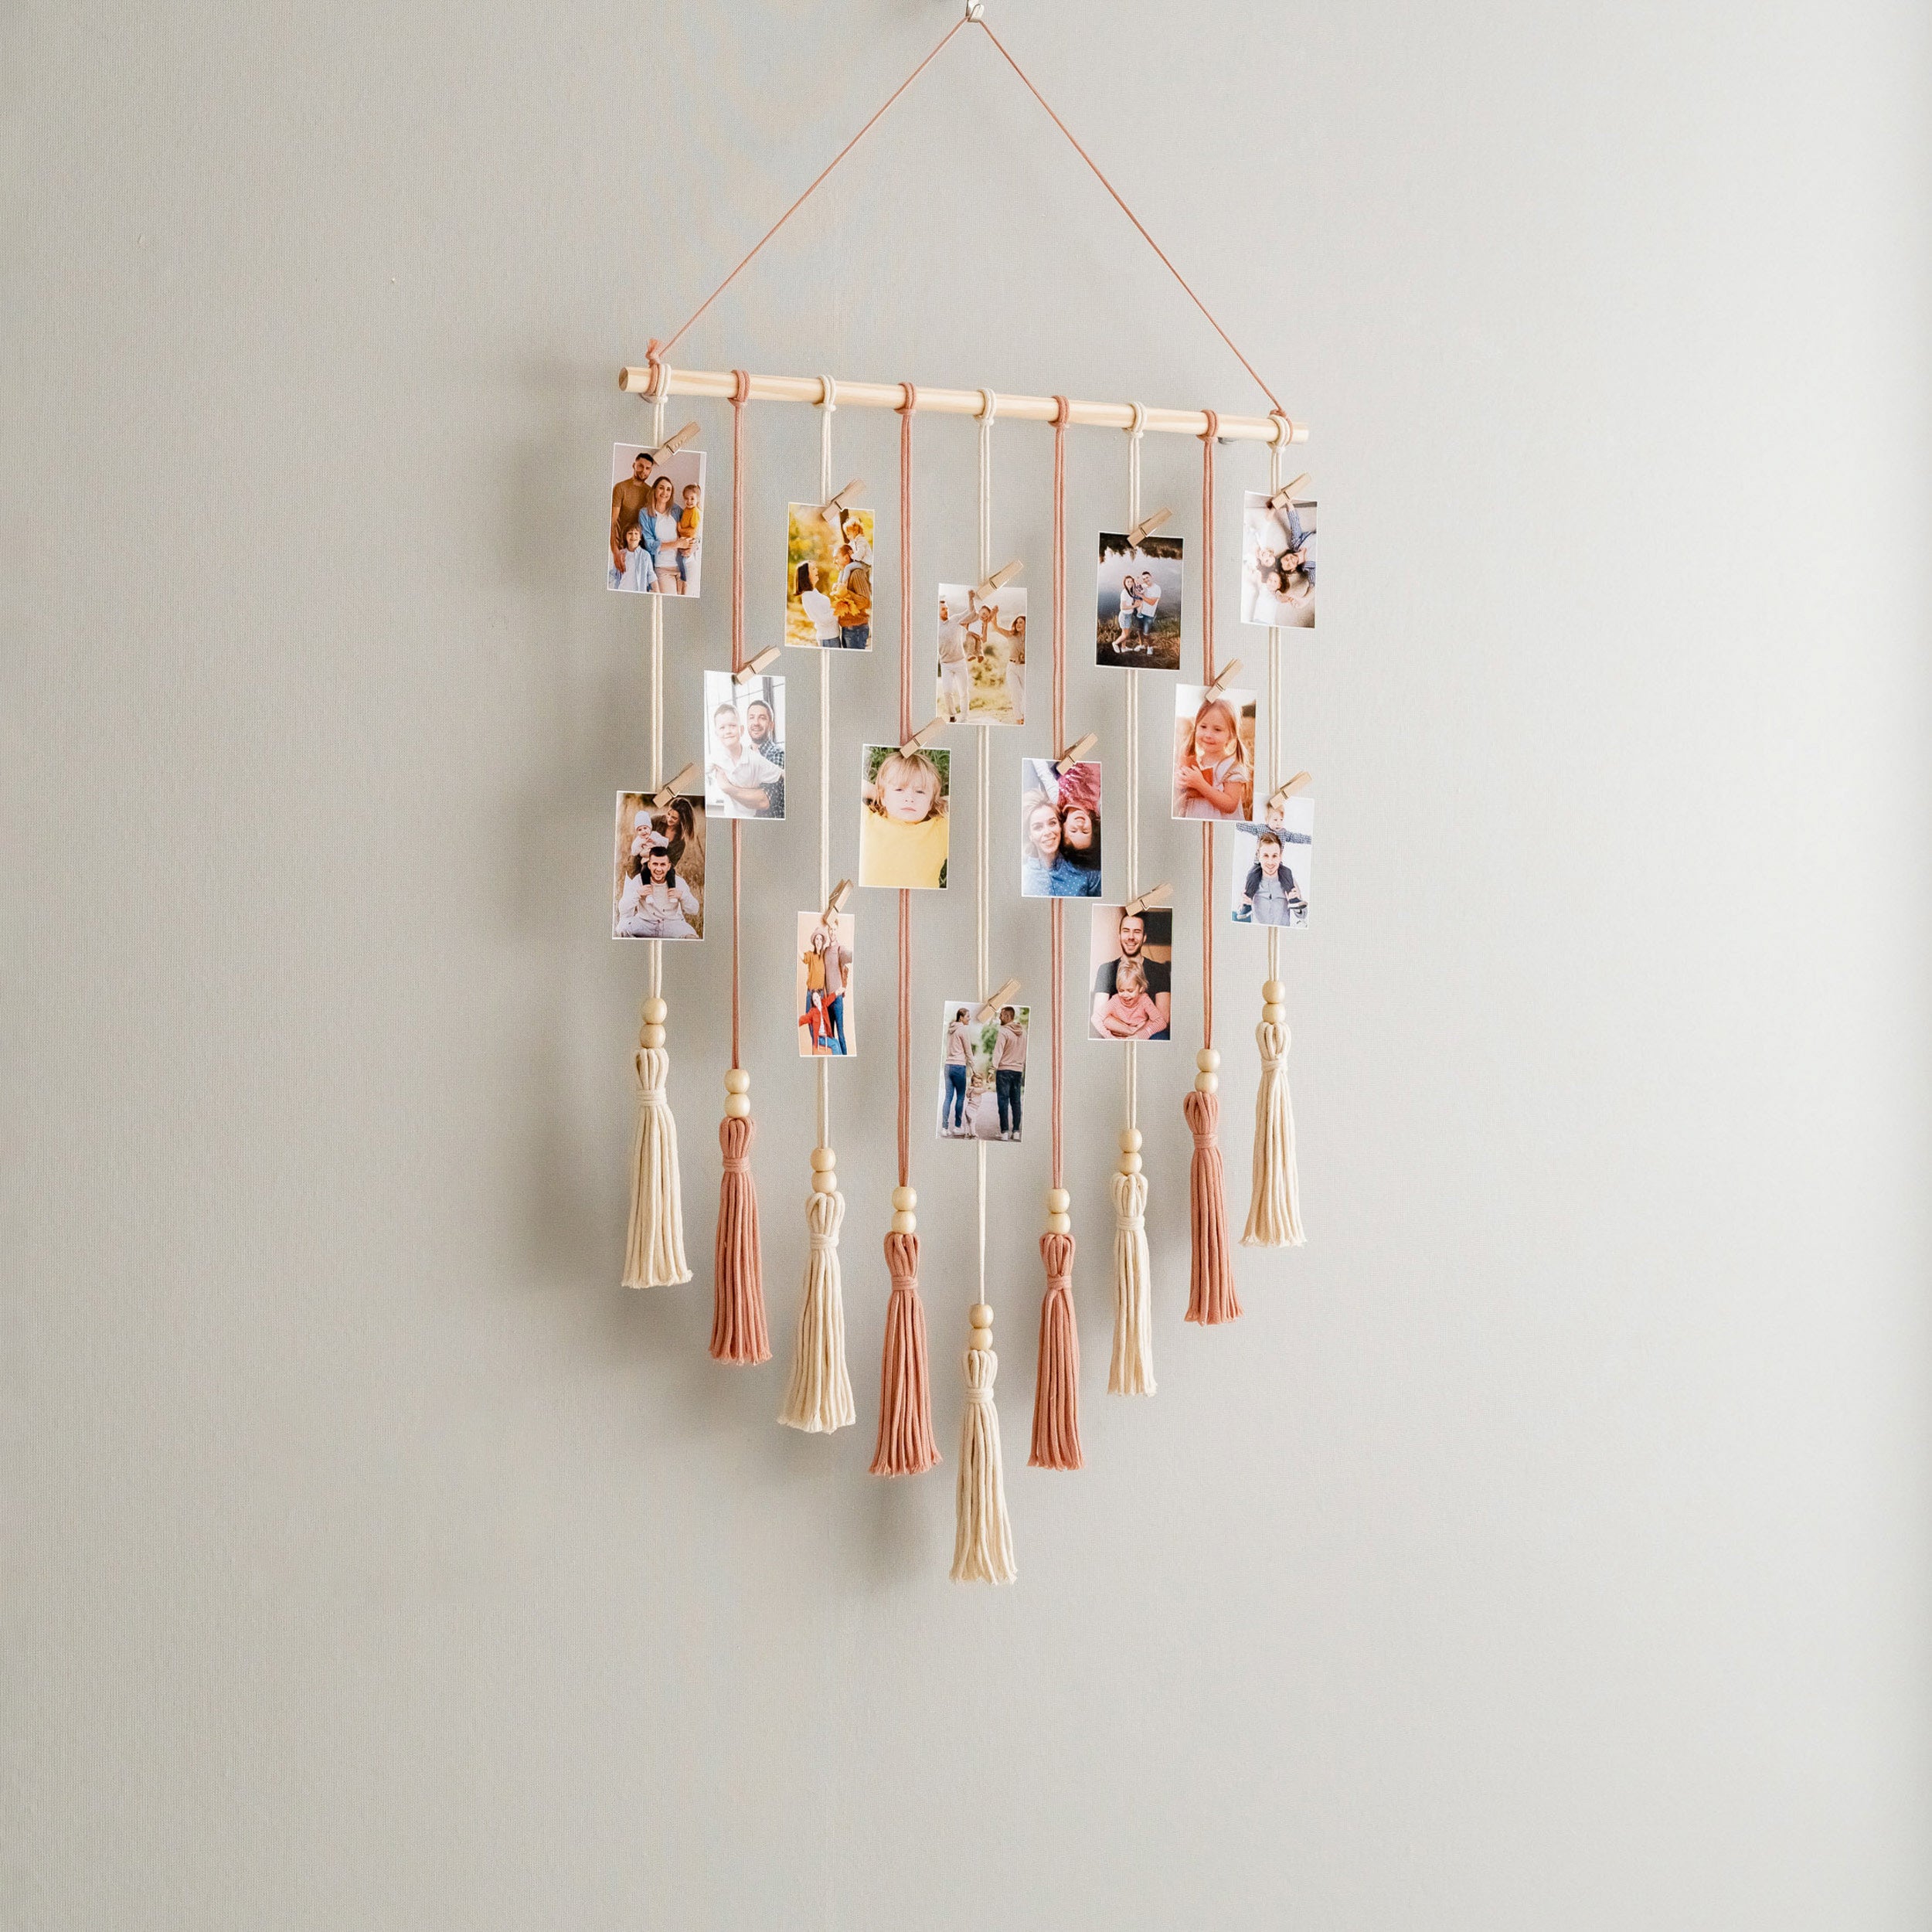 Stylish Macrame Photo Hanger for Capturing Memories